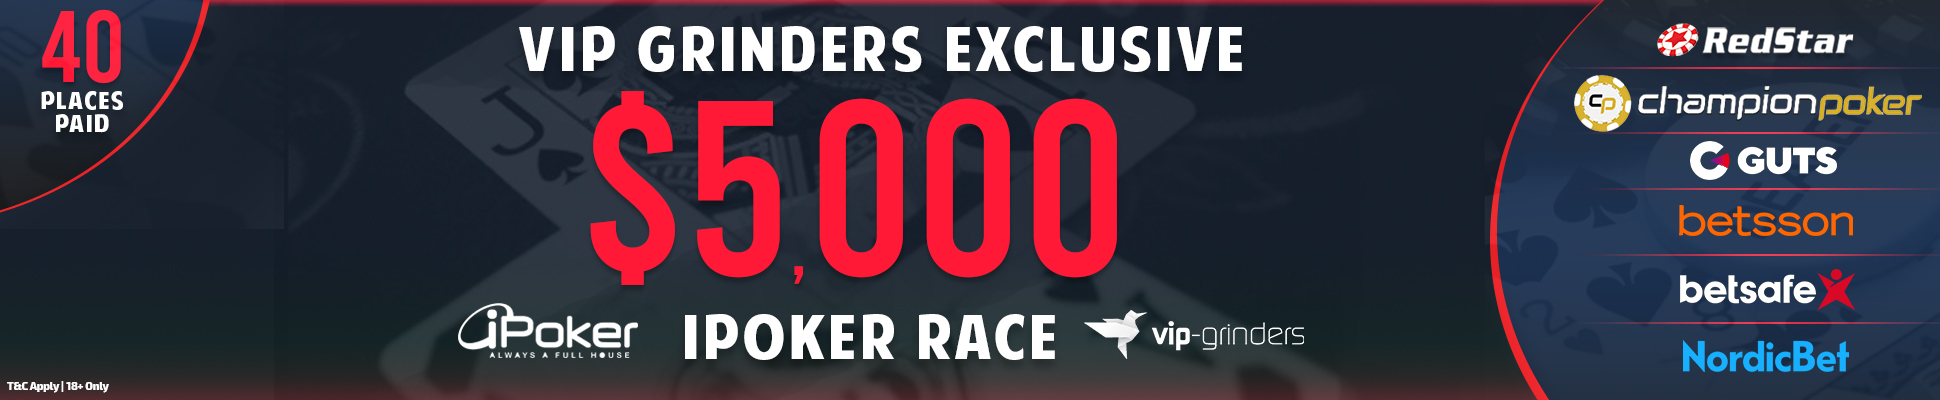 VIP Grinders $5,000 iPoker race